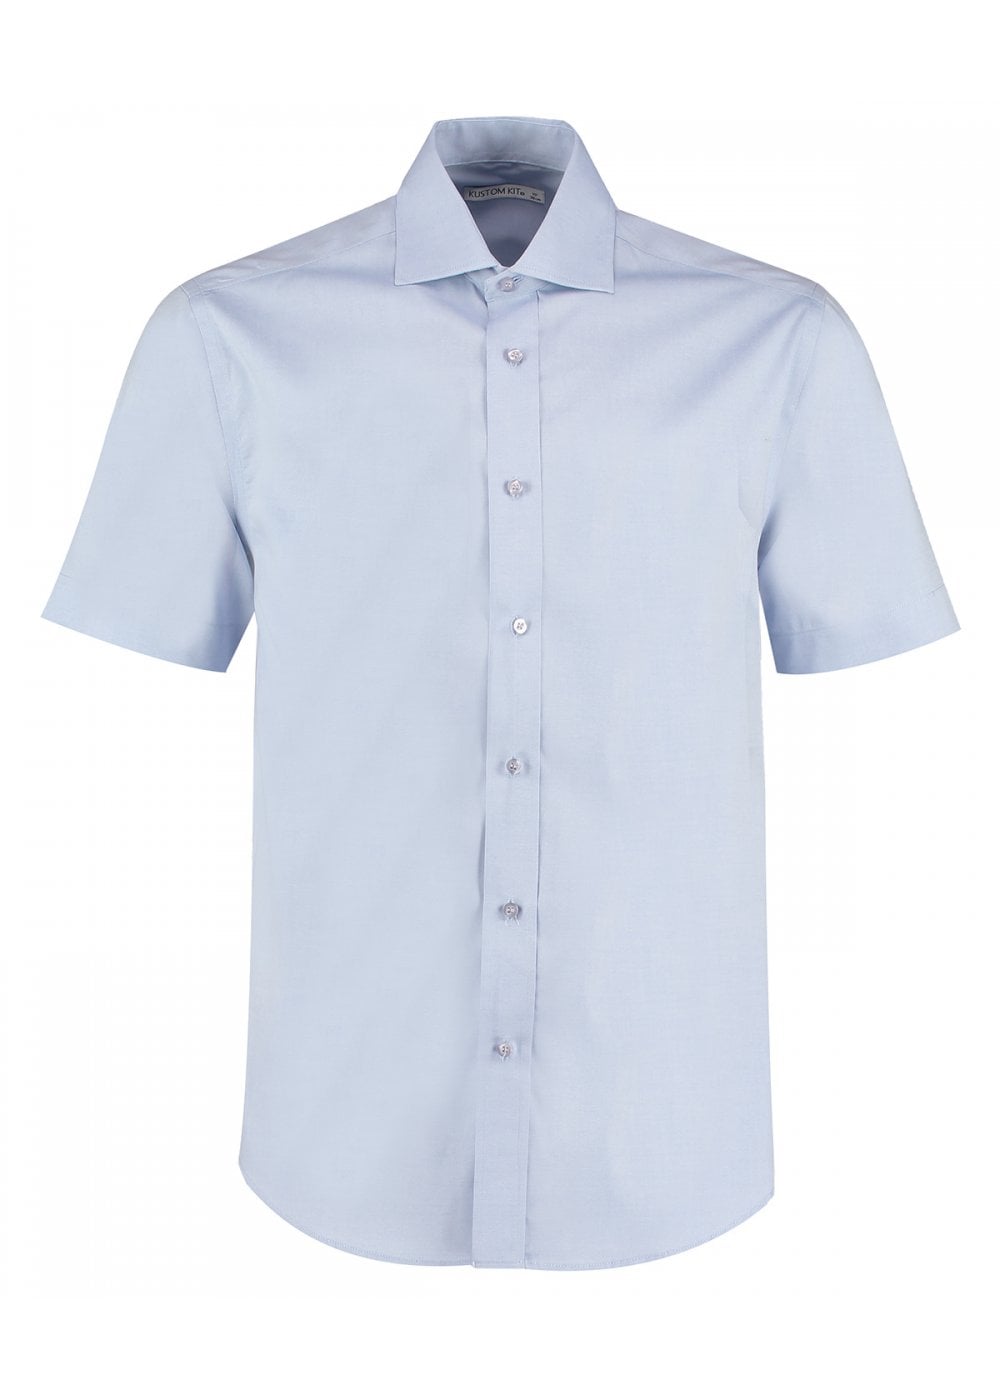 KK117 Kustom Kit Executive Oxford Shirt Short Sleeve